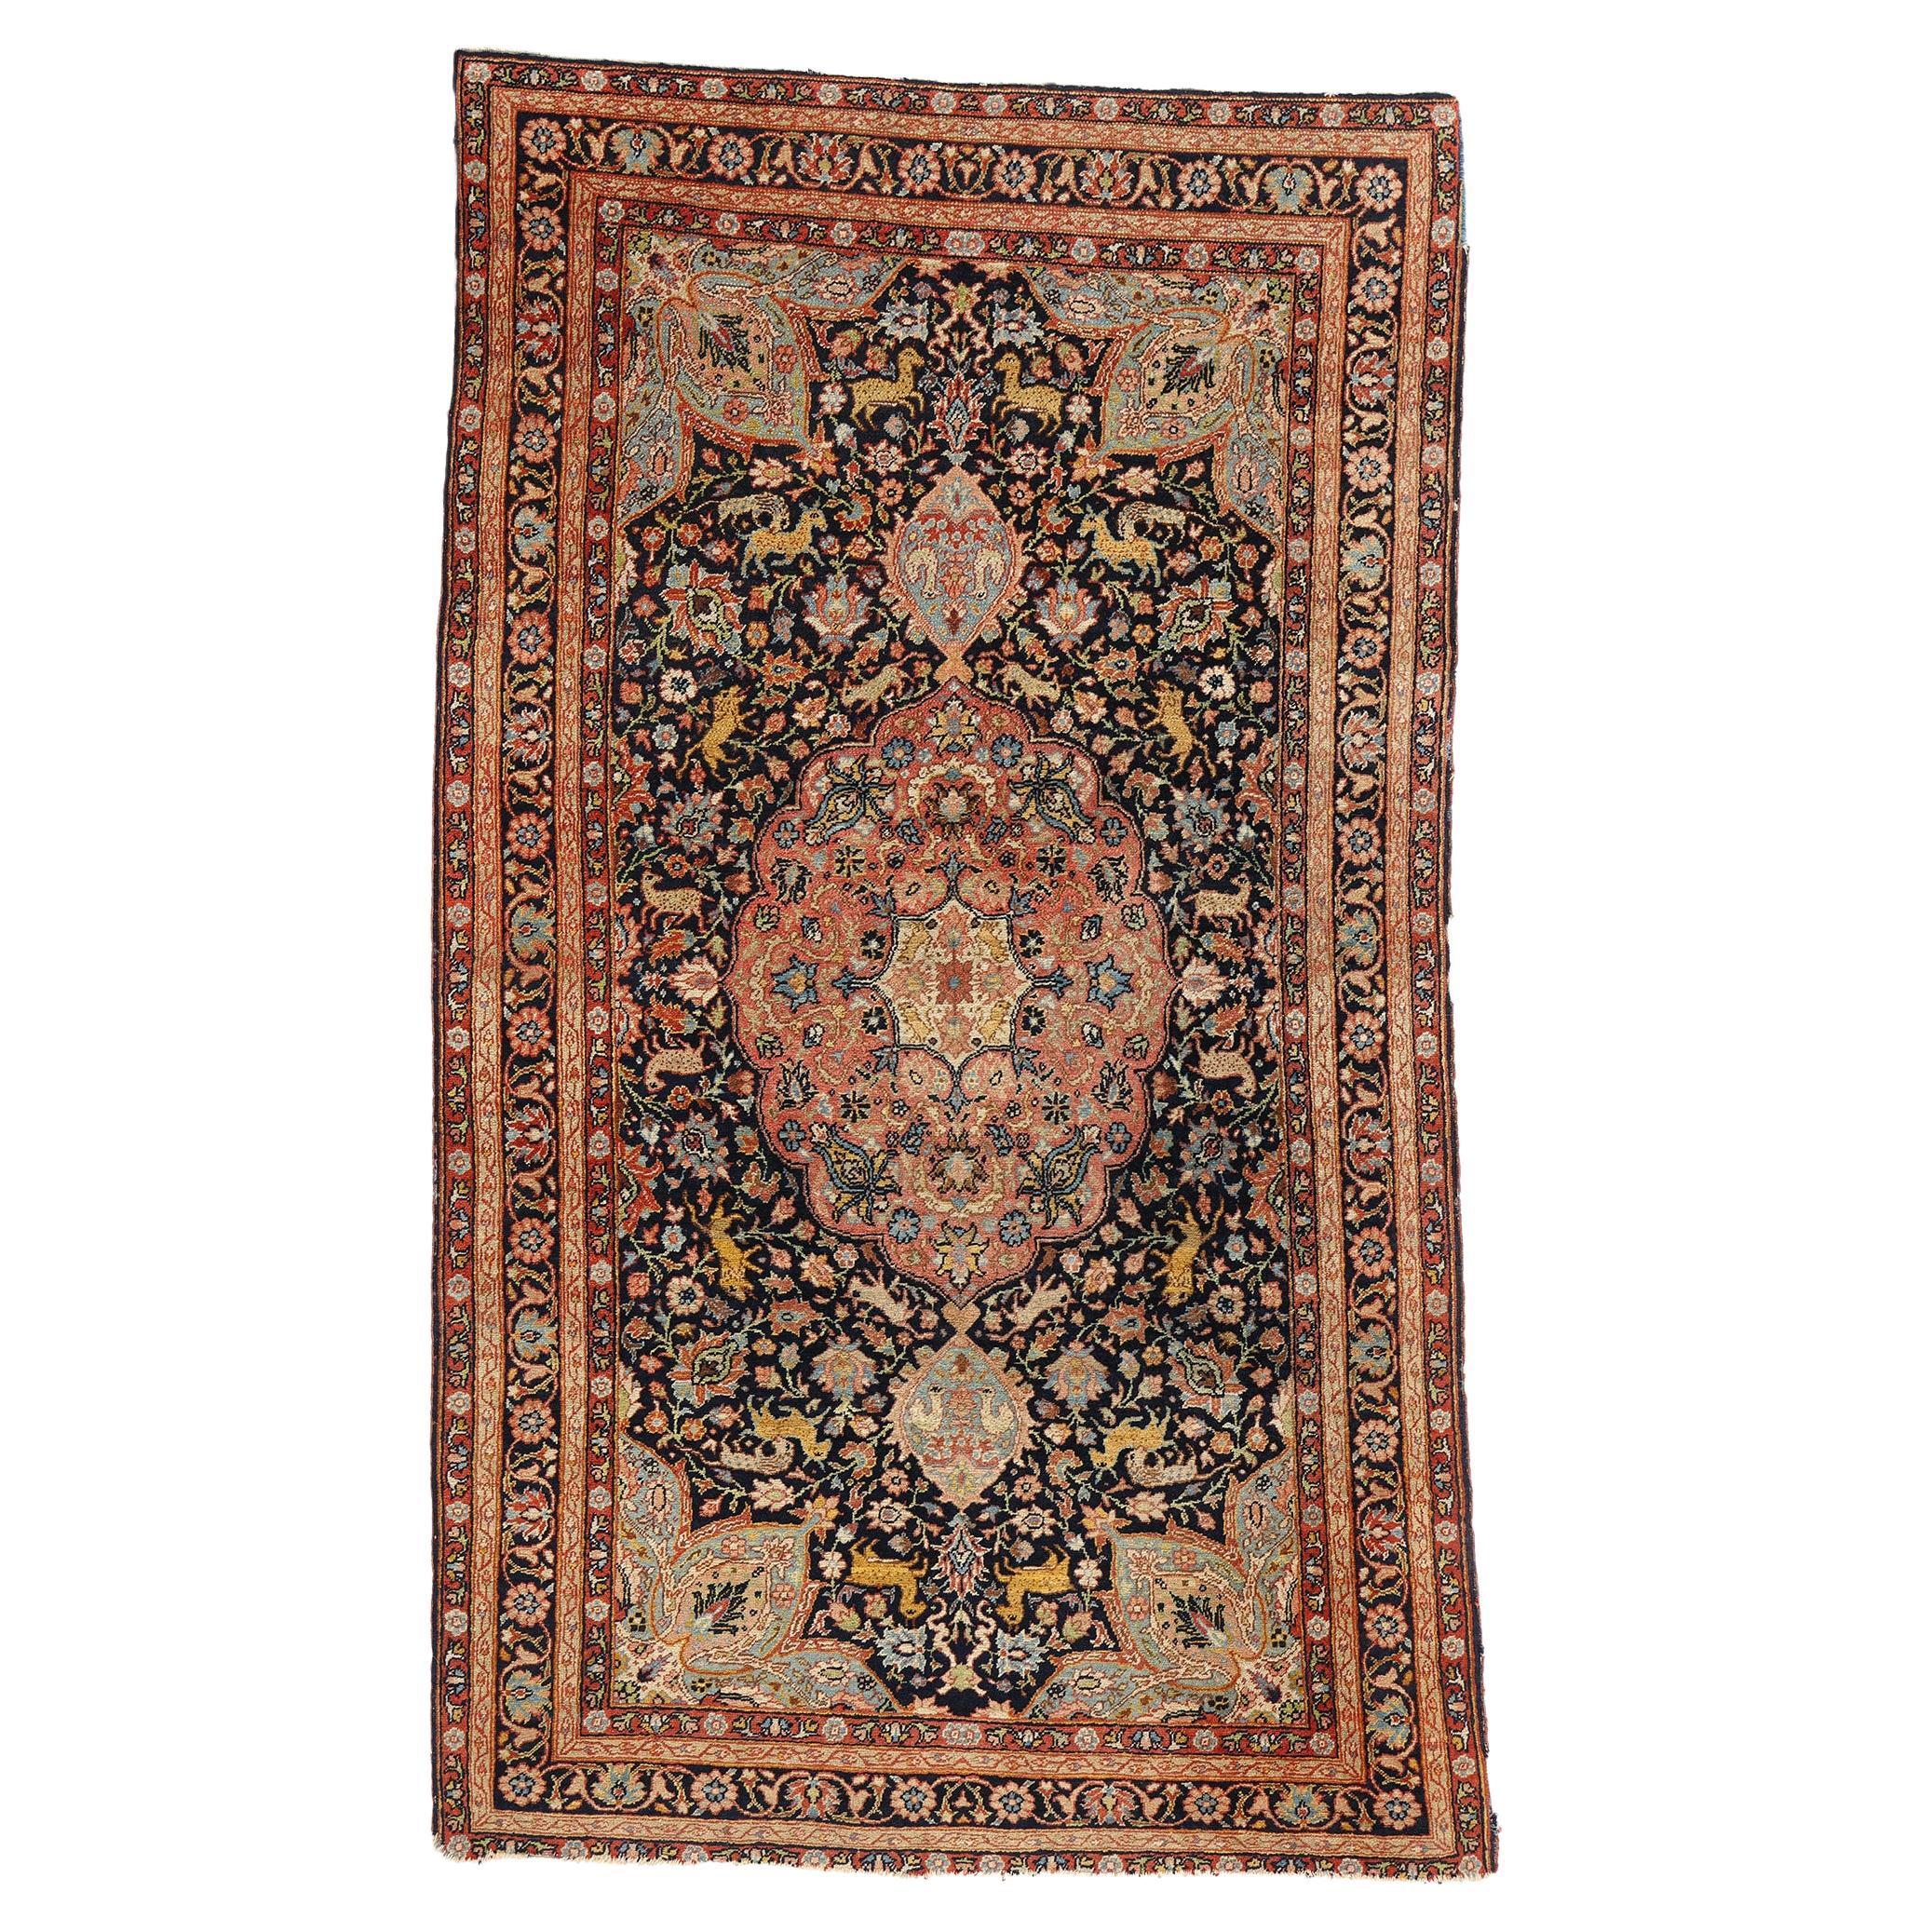 Safavid Medallion and Animal Persian Tabriz Hunting Carpet